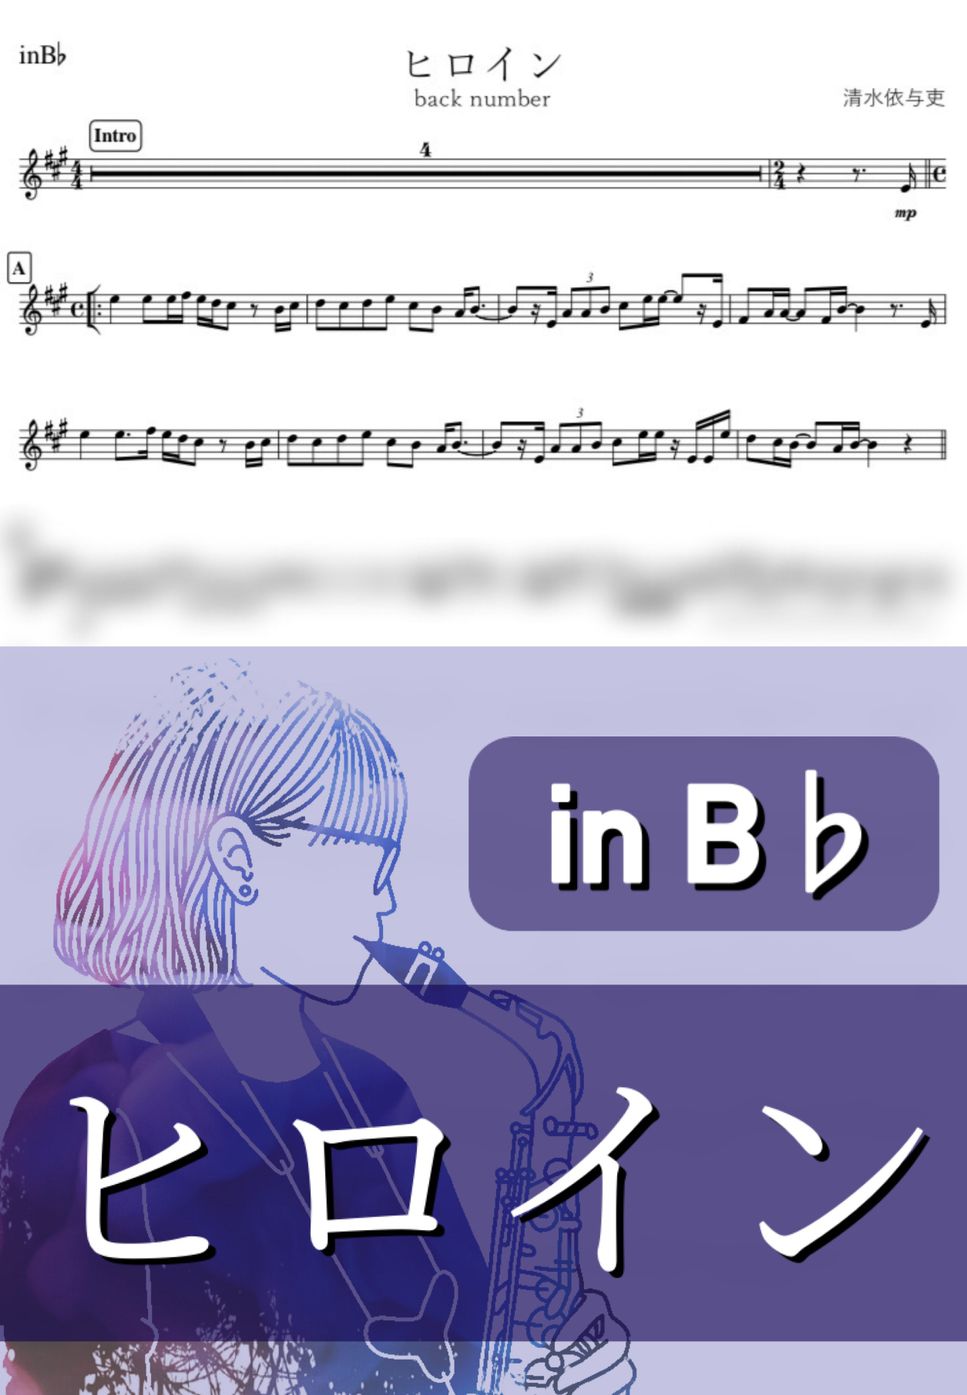 back number - ヒロイン (B♭) by kanamusic